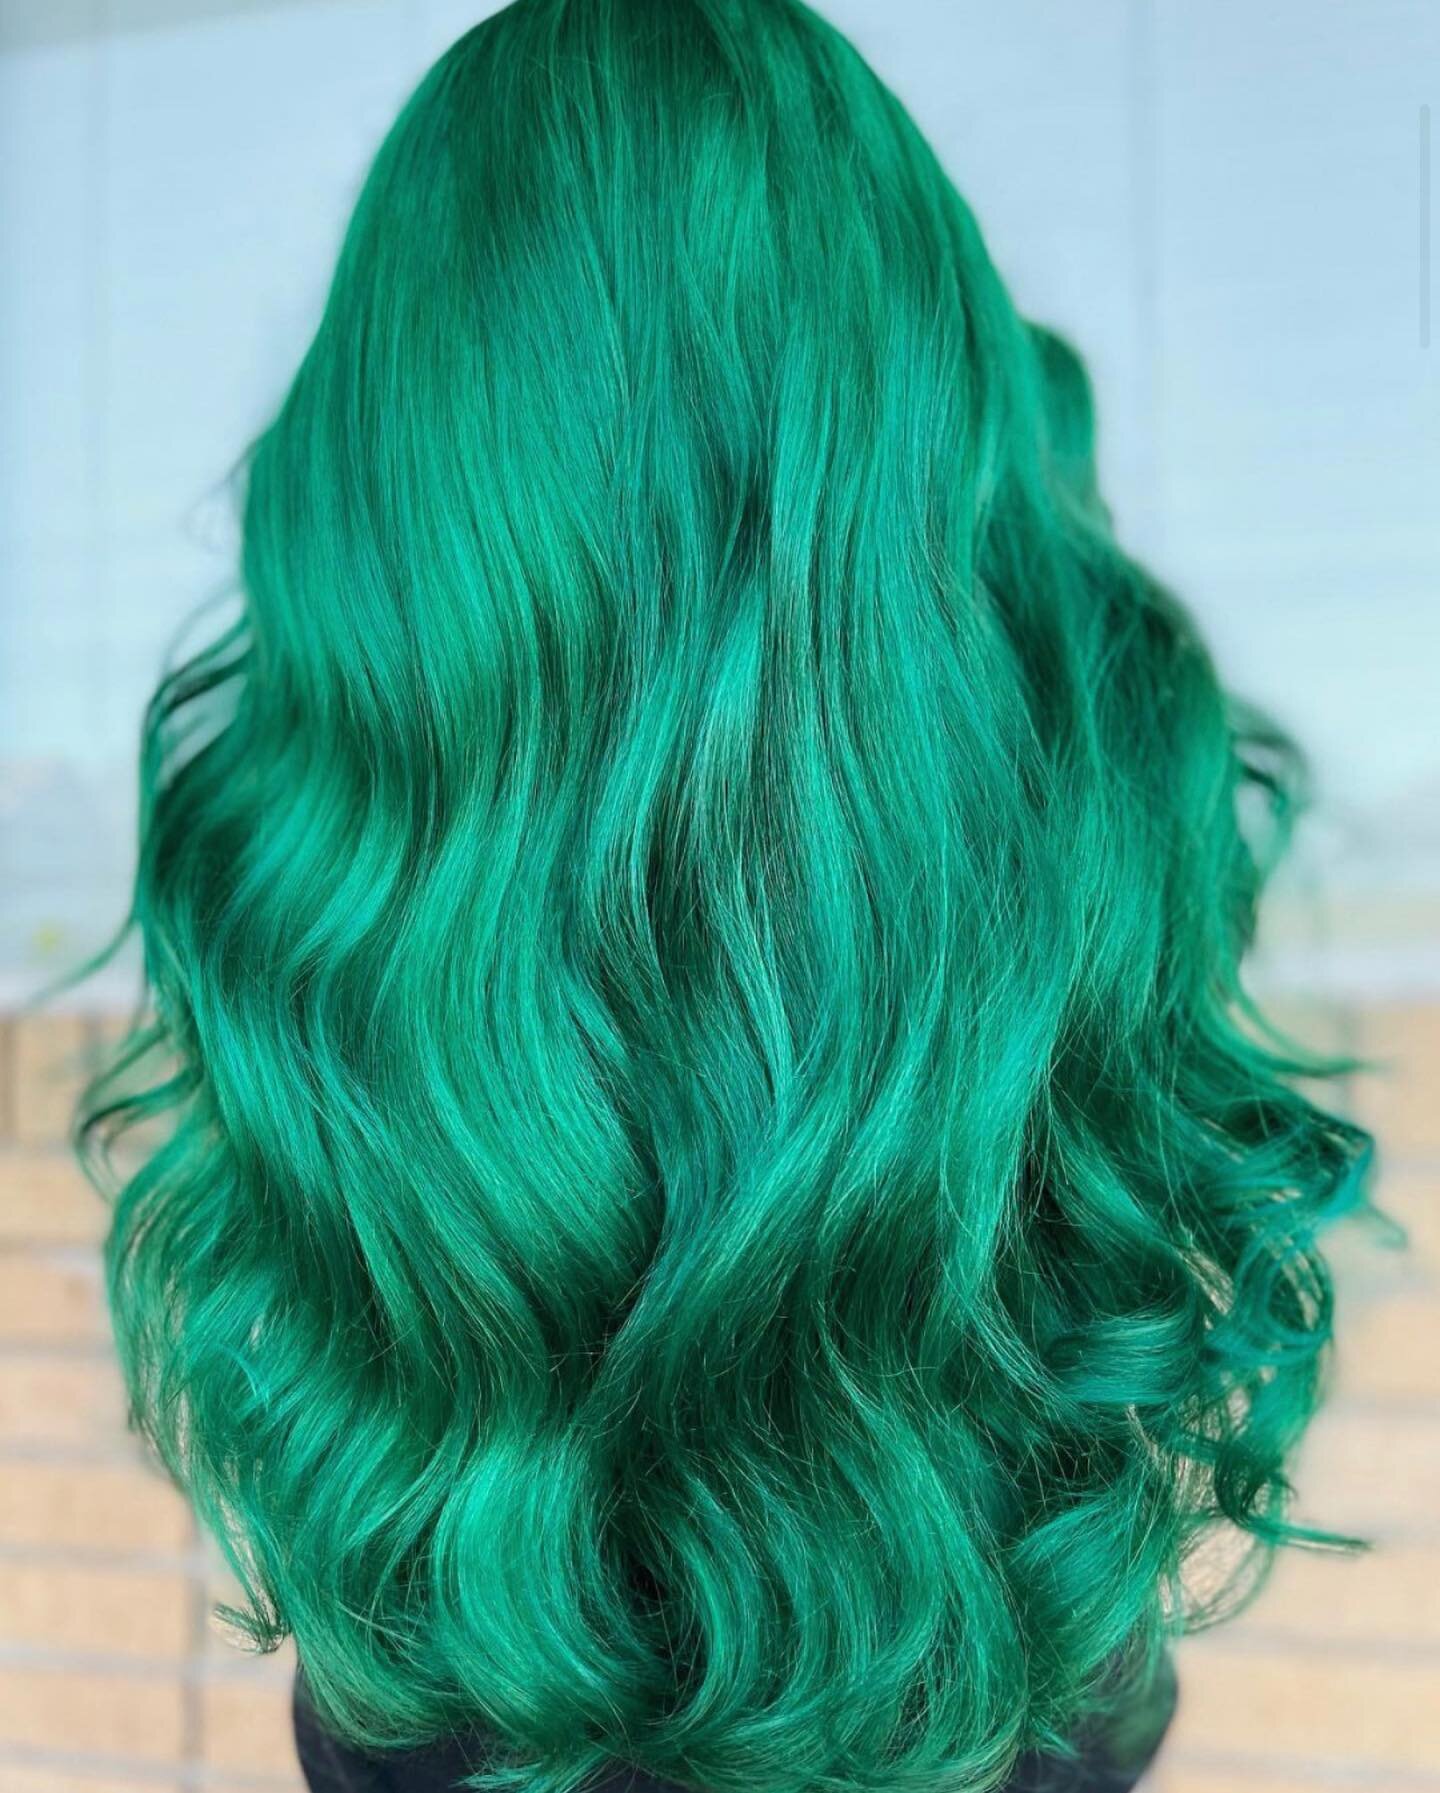 It&rsquo;s the GREEN for us...☘️💚Hair:@sydneyannlopezhair 
.
.
.
.
.
.
#vaultbeauty #vaultverified #vaultartist #hair #greenhair #haircolor #haircolorist #hairgoals #hair #hairstylist